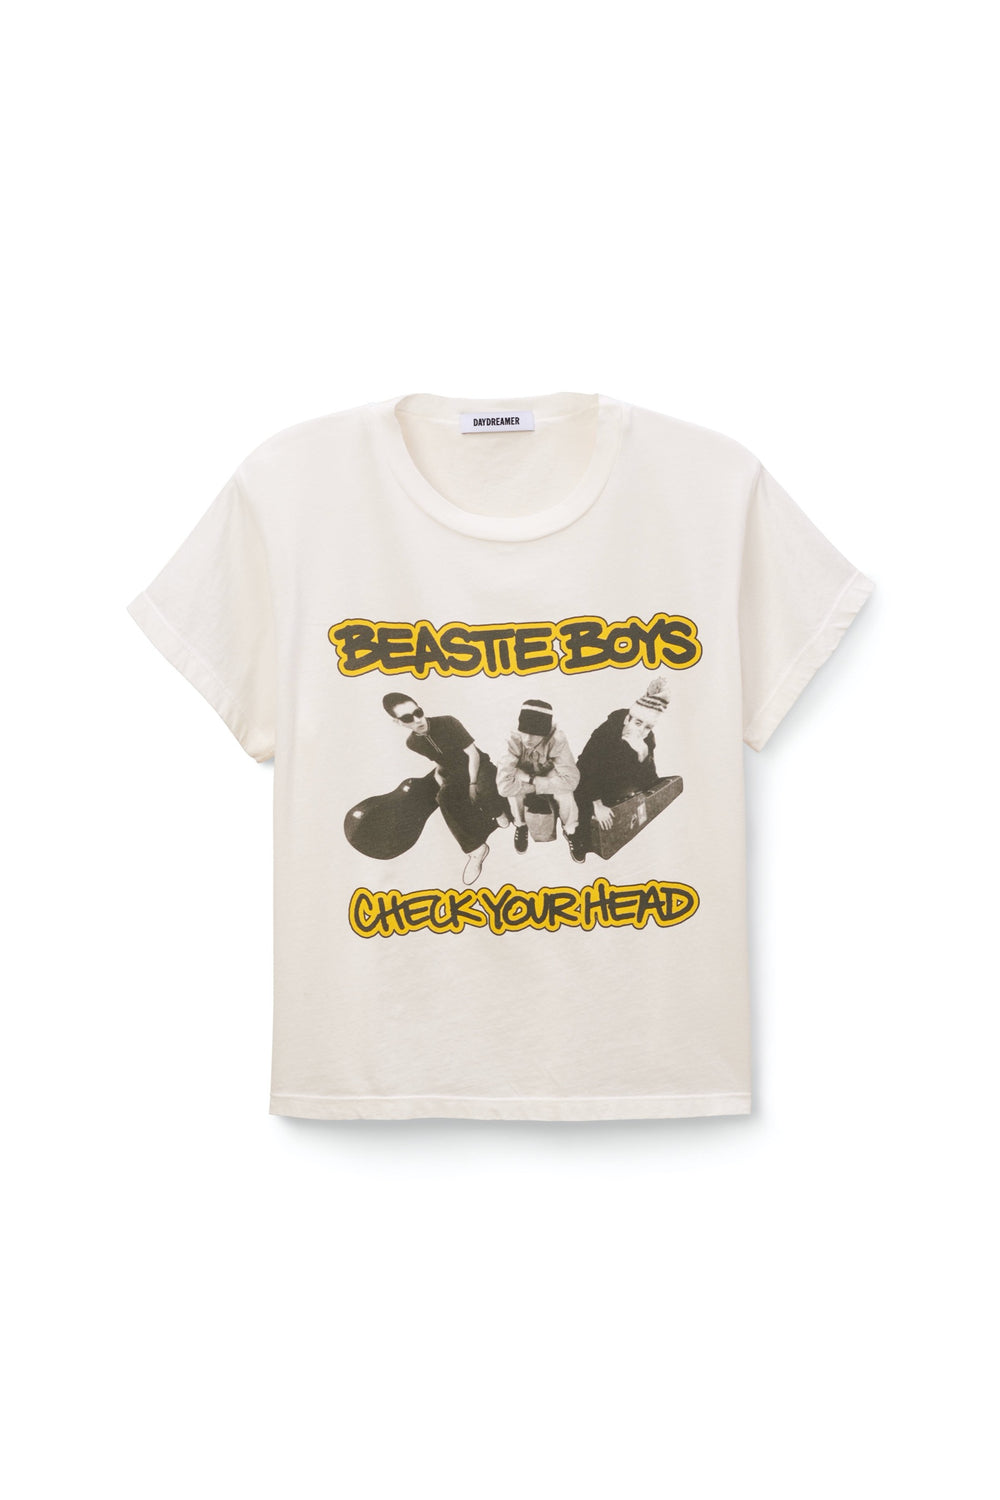 Beastie Boys Check Your Head Solo Tee